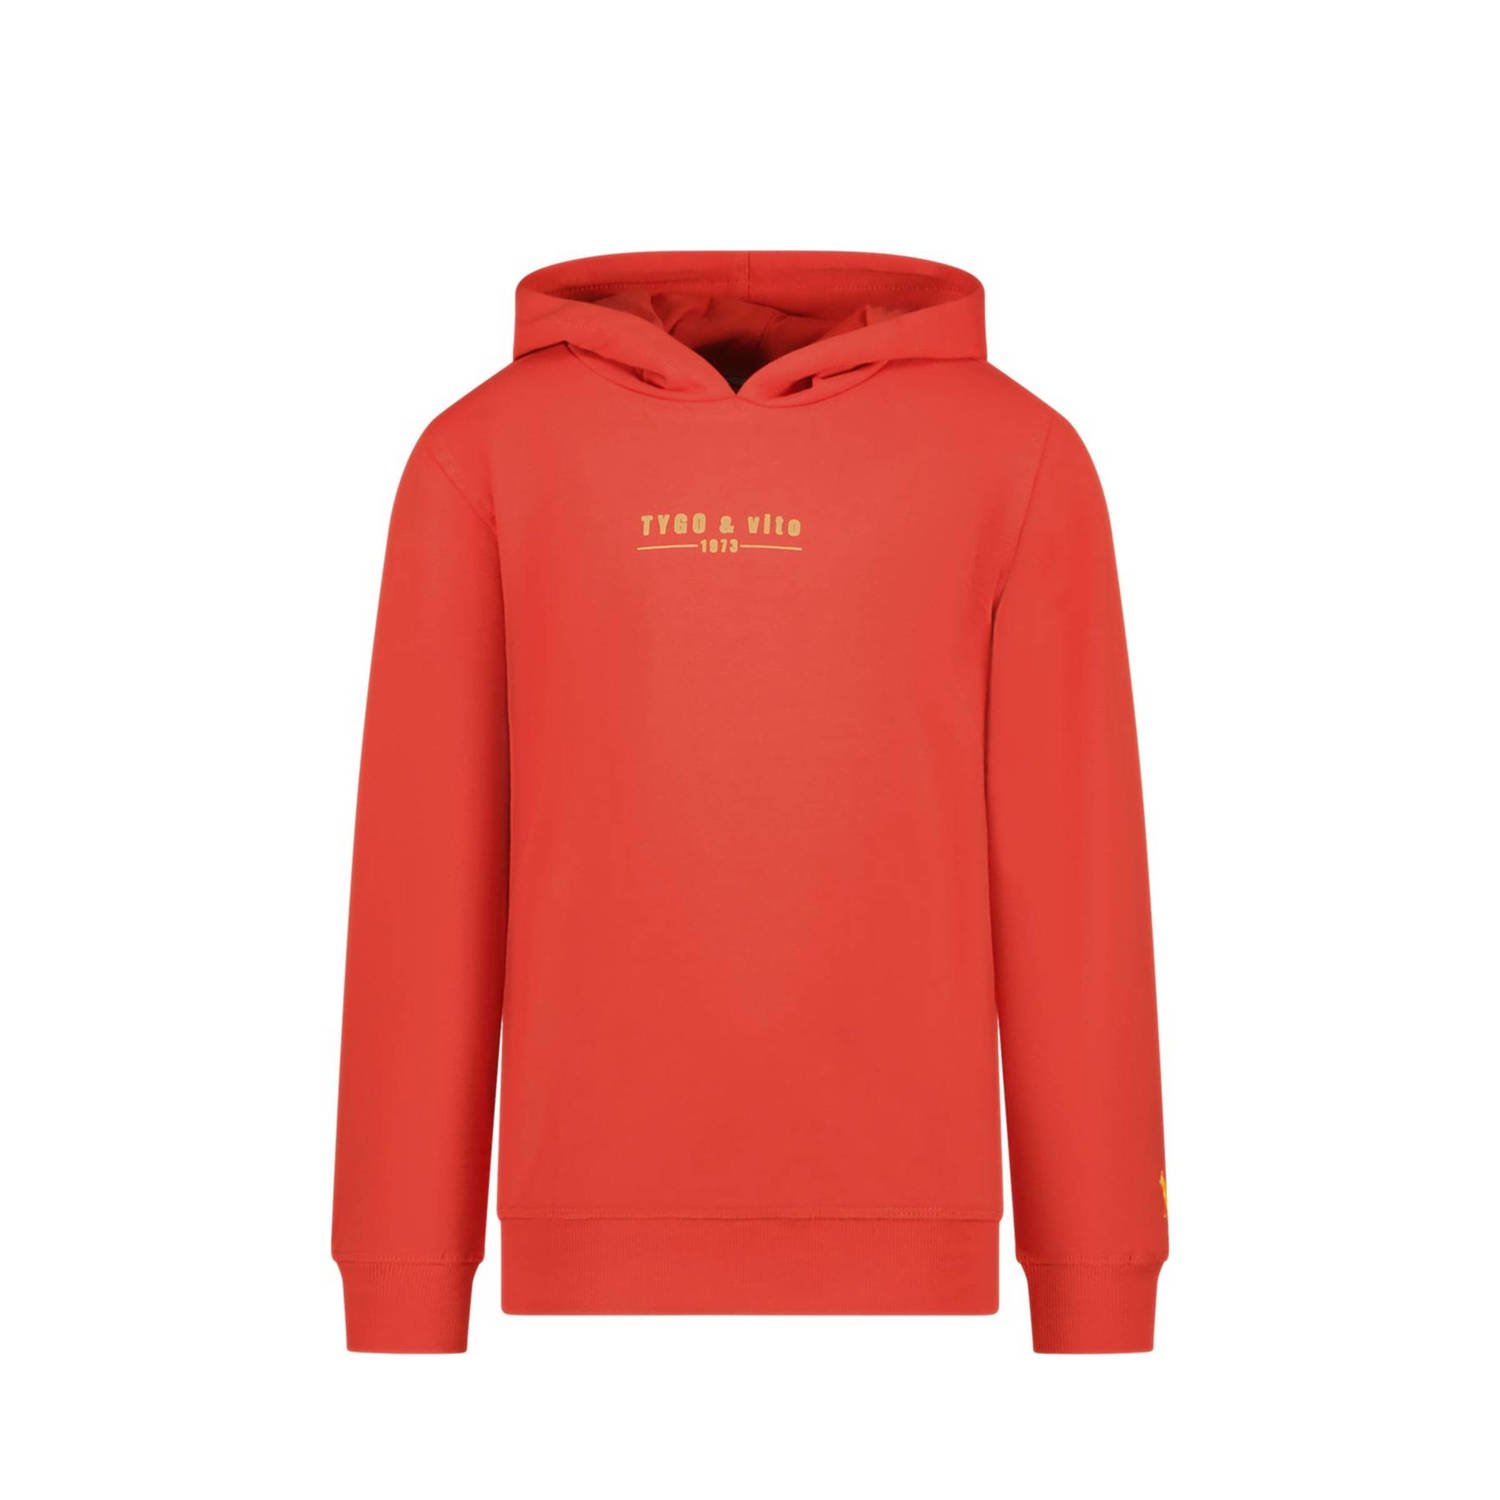 TYGO & vito hoodie Hugo met logo helderrood Sweater Logo 110 116